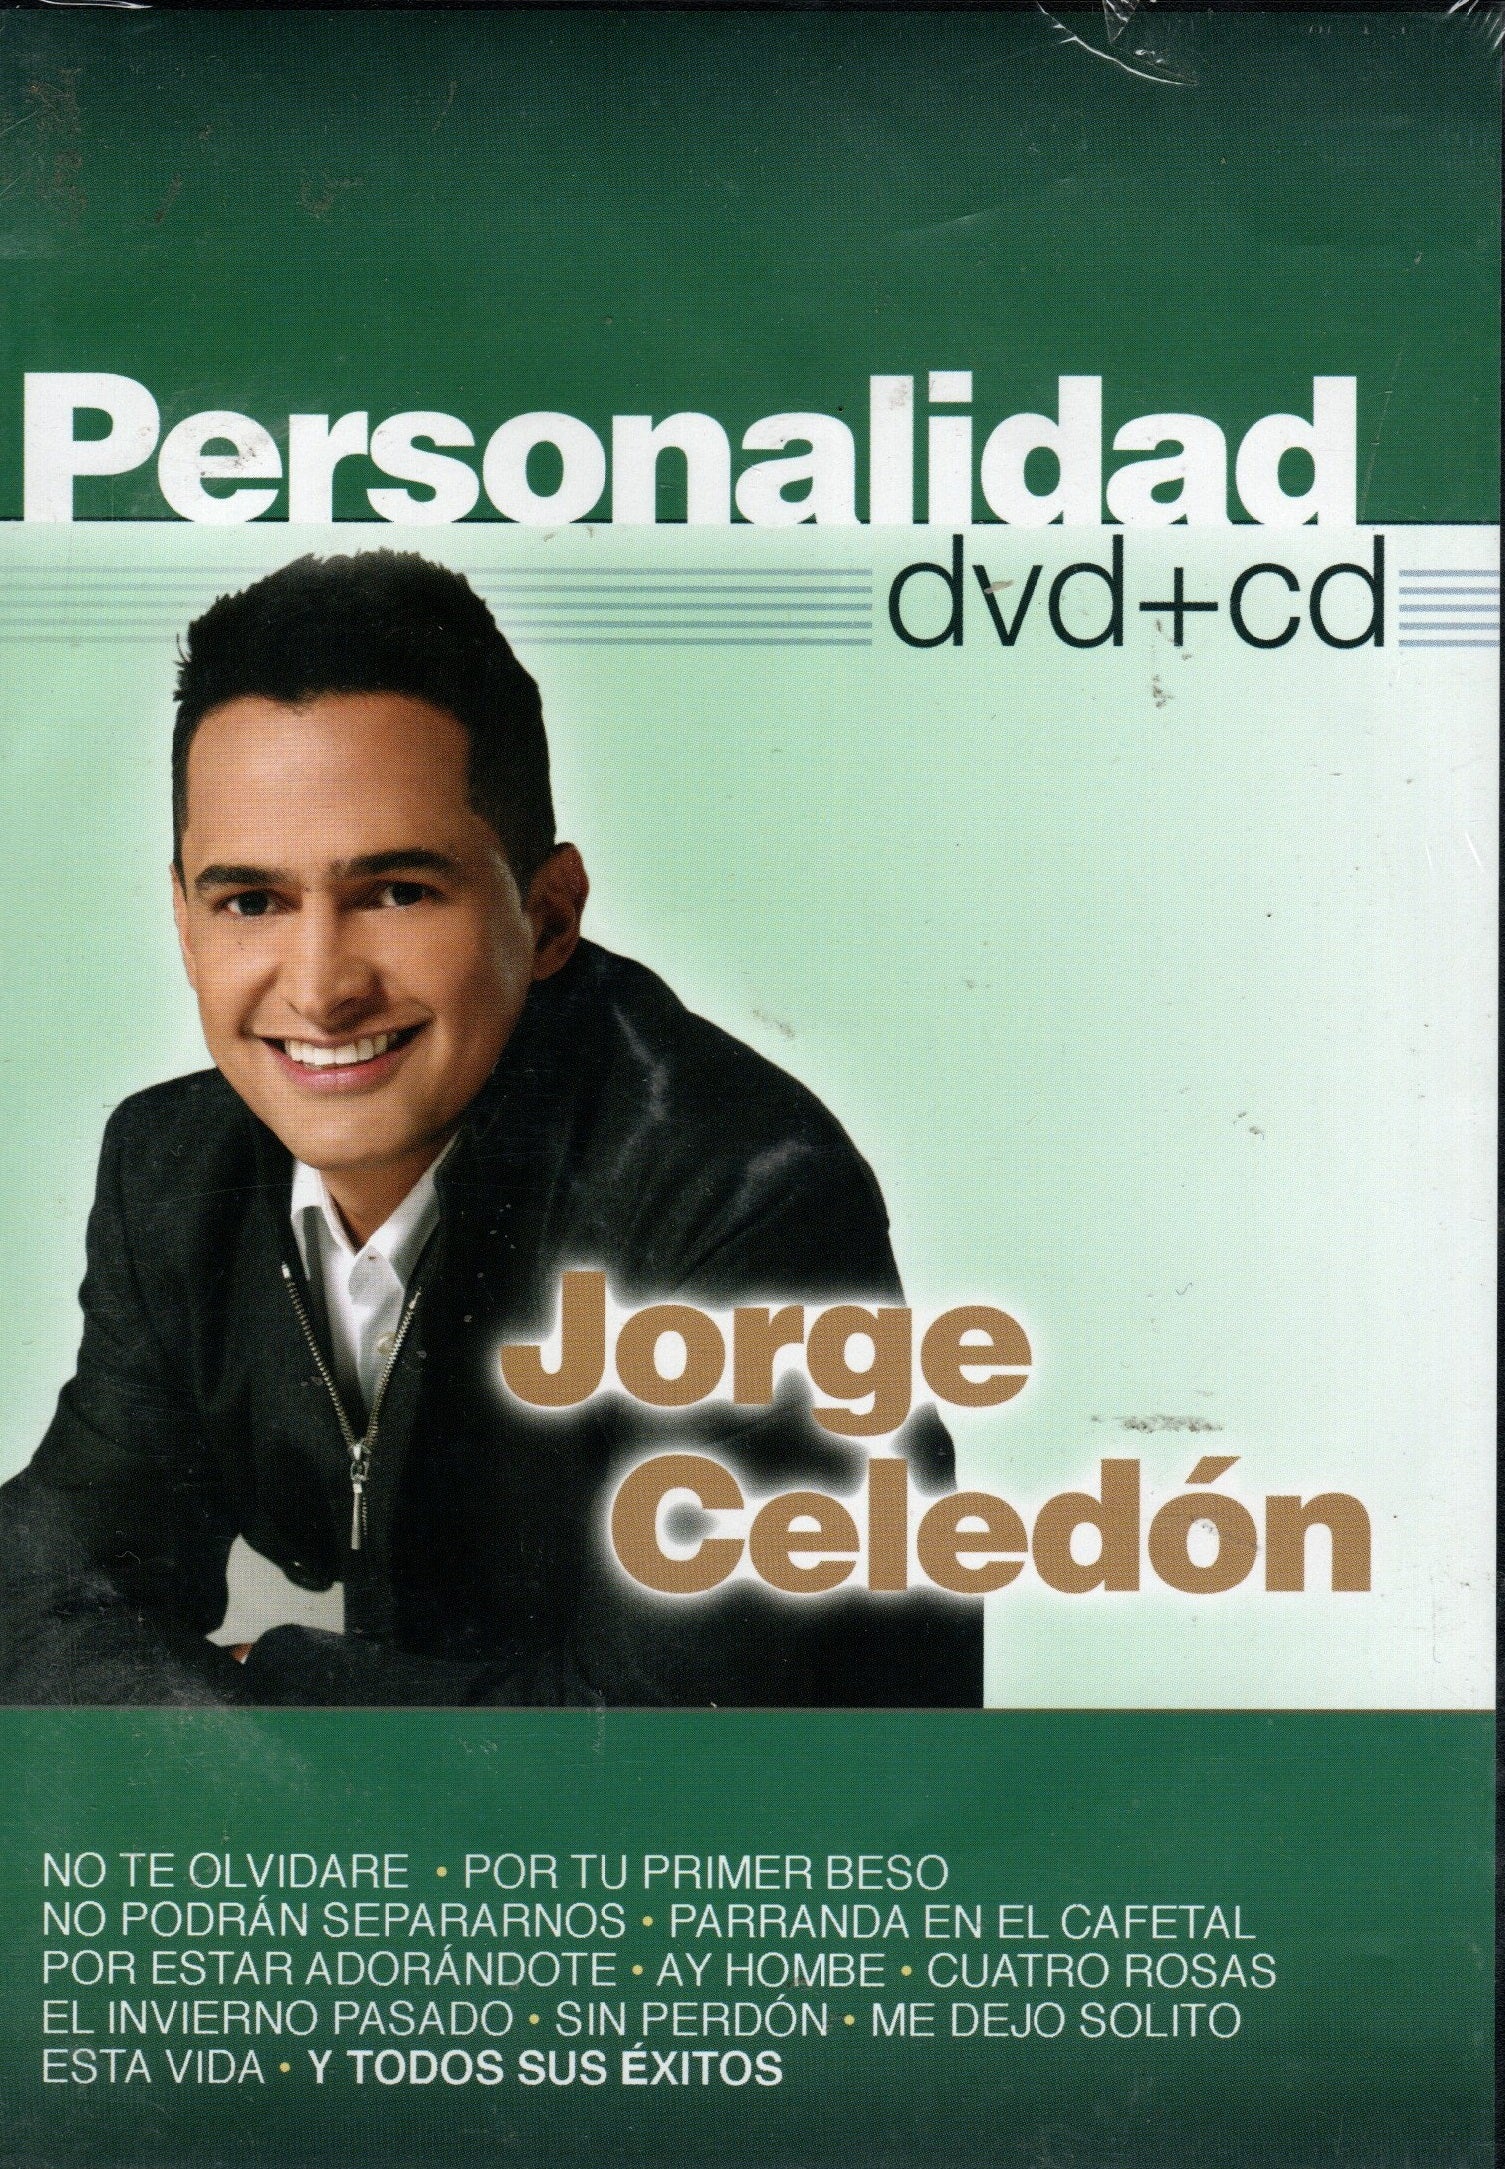 CD+DVD Jorge Celedón - Personalidad